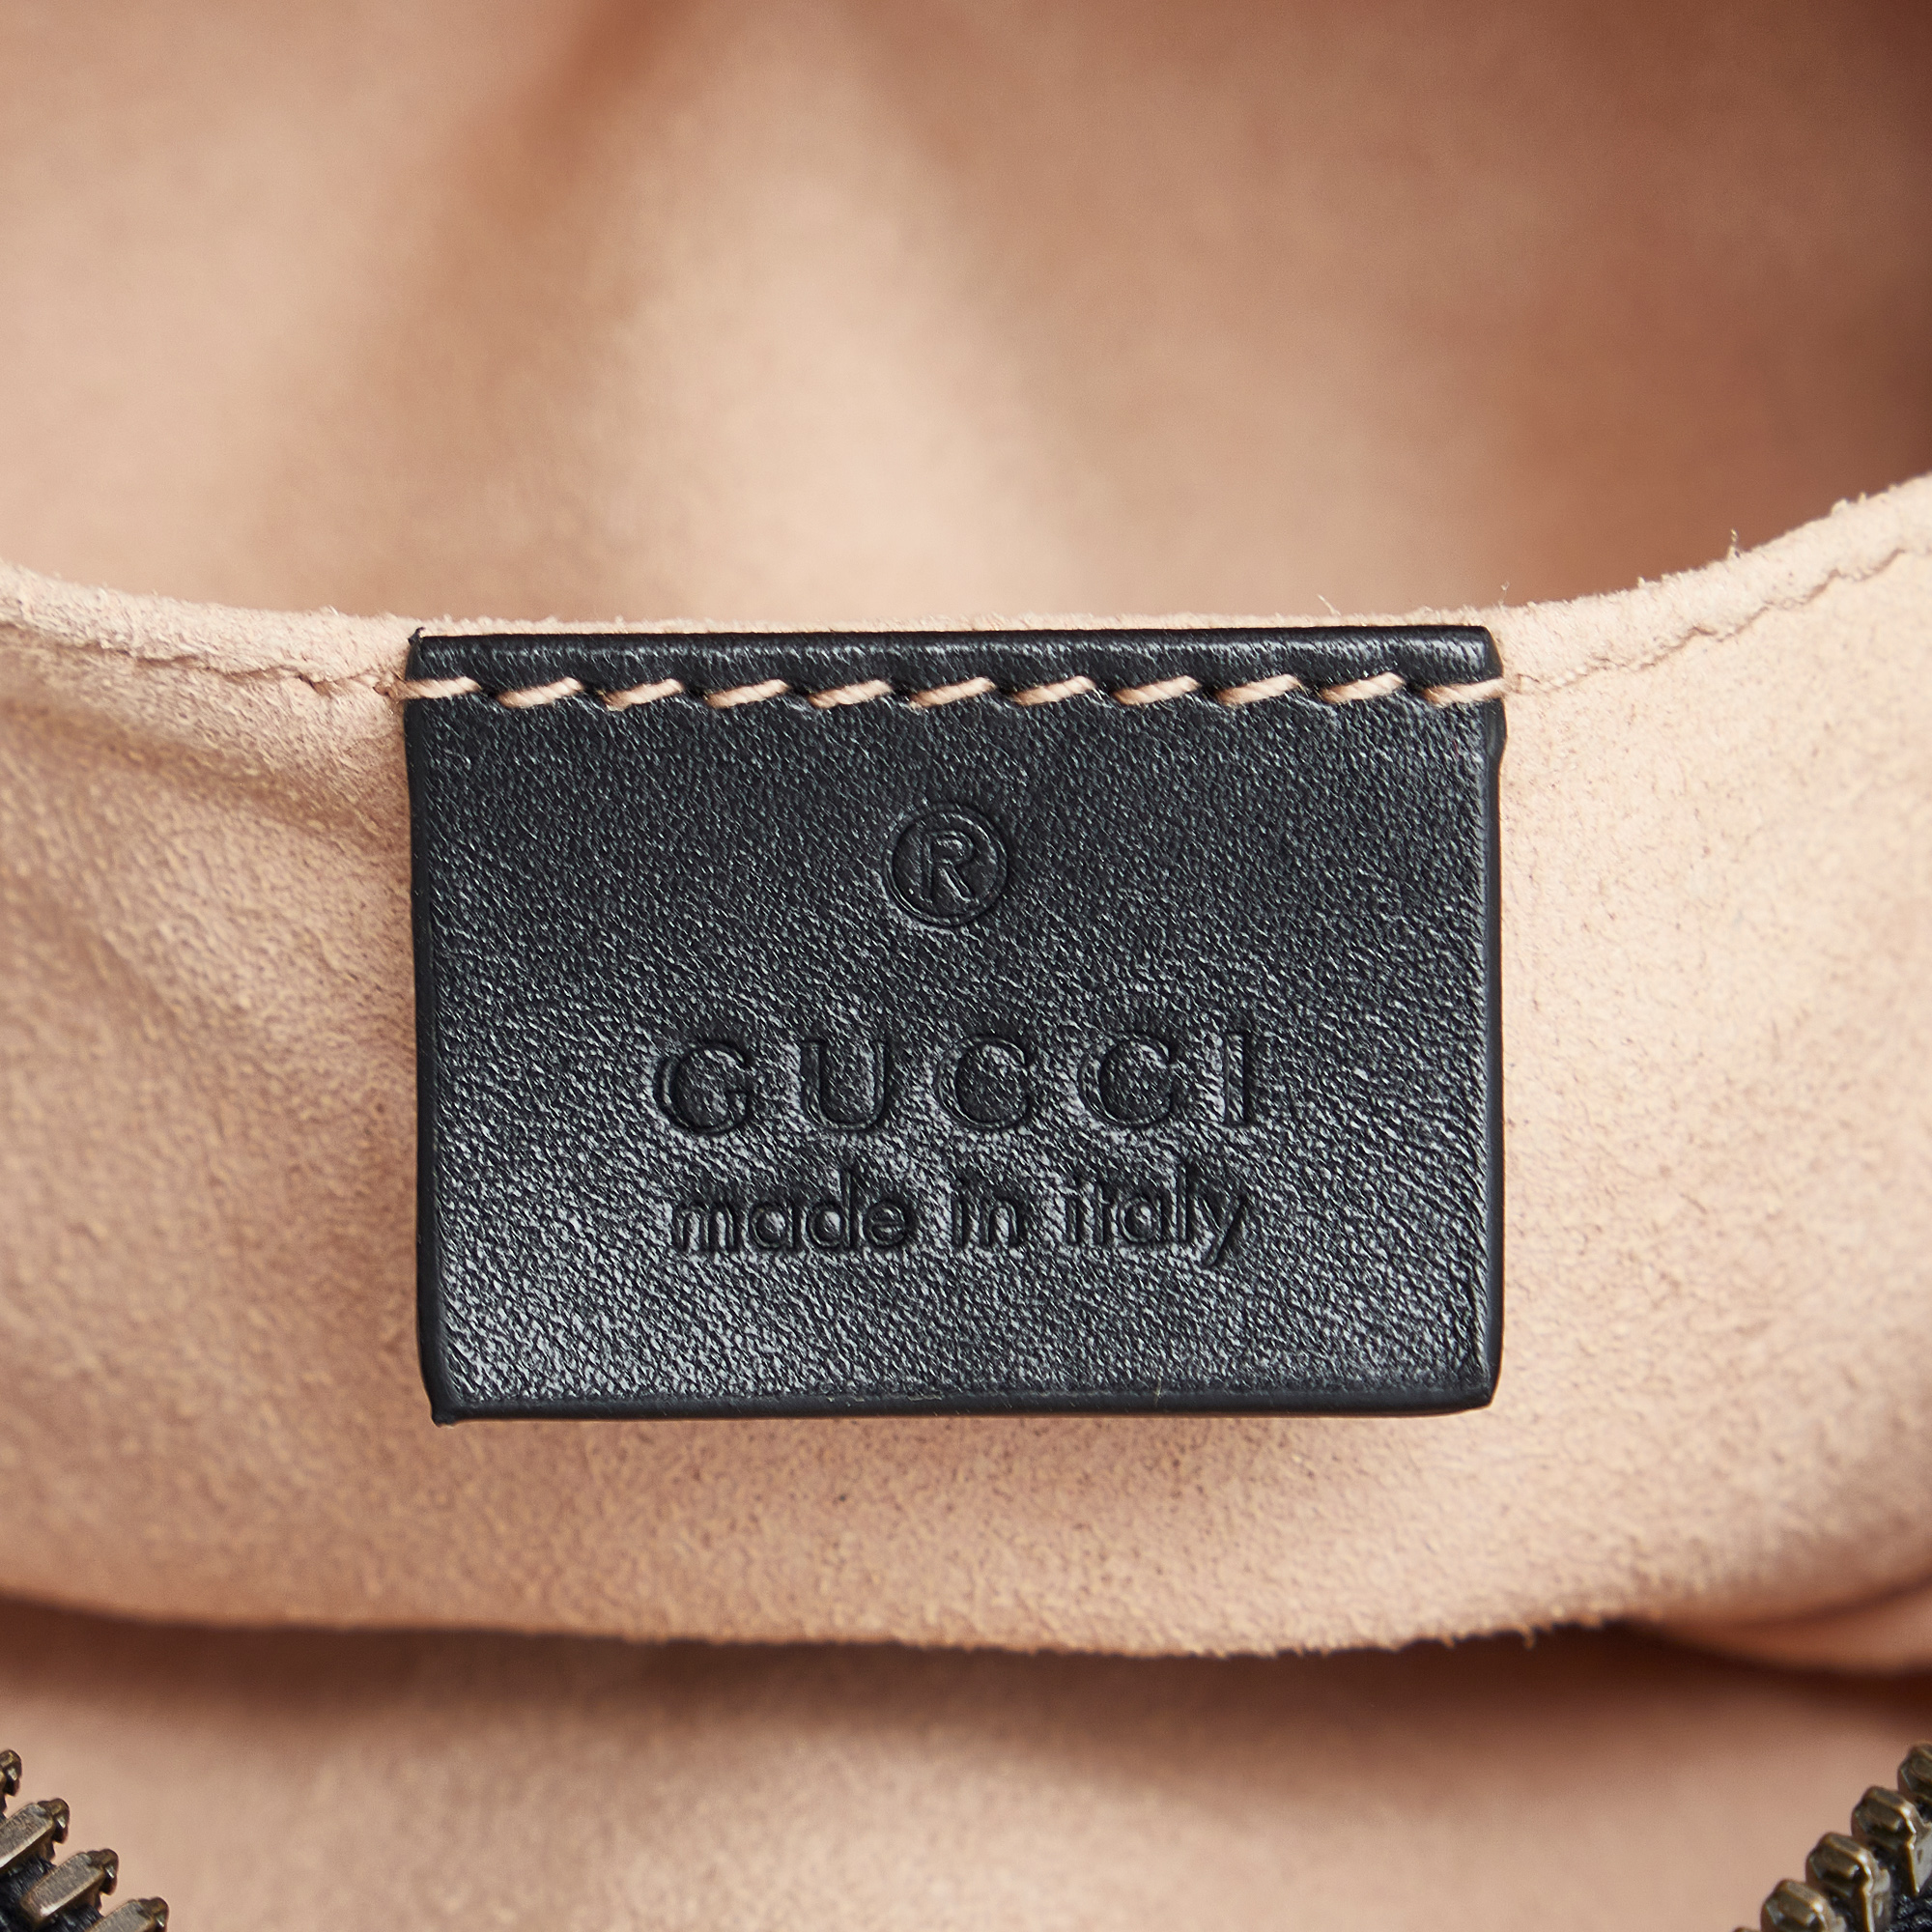 Gucci Black Gg Marmont Matelasse Belt Bag